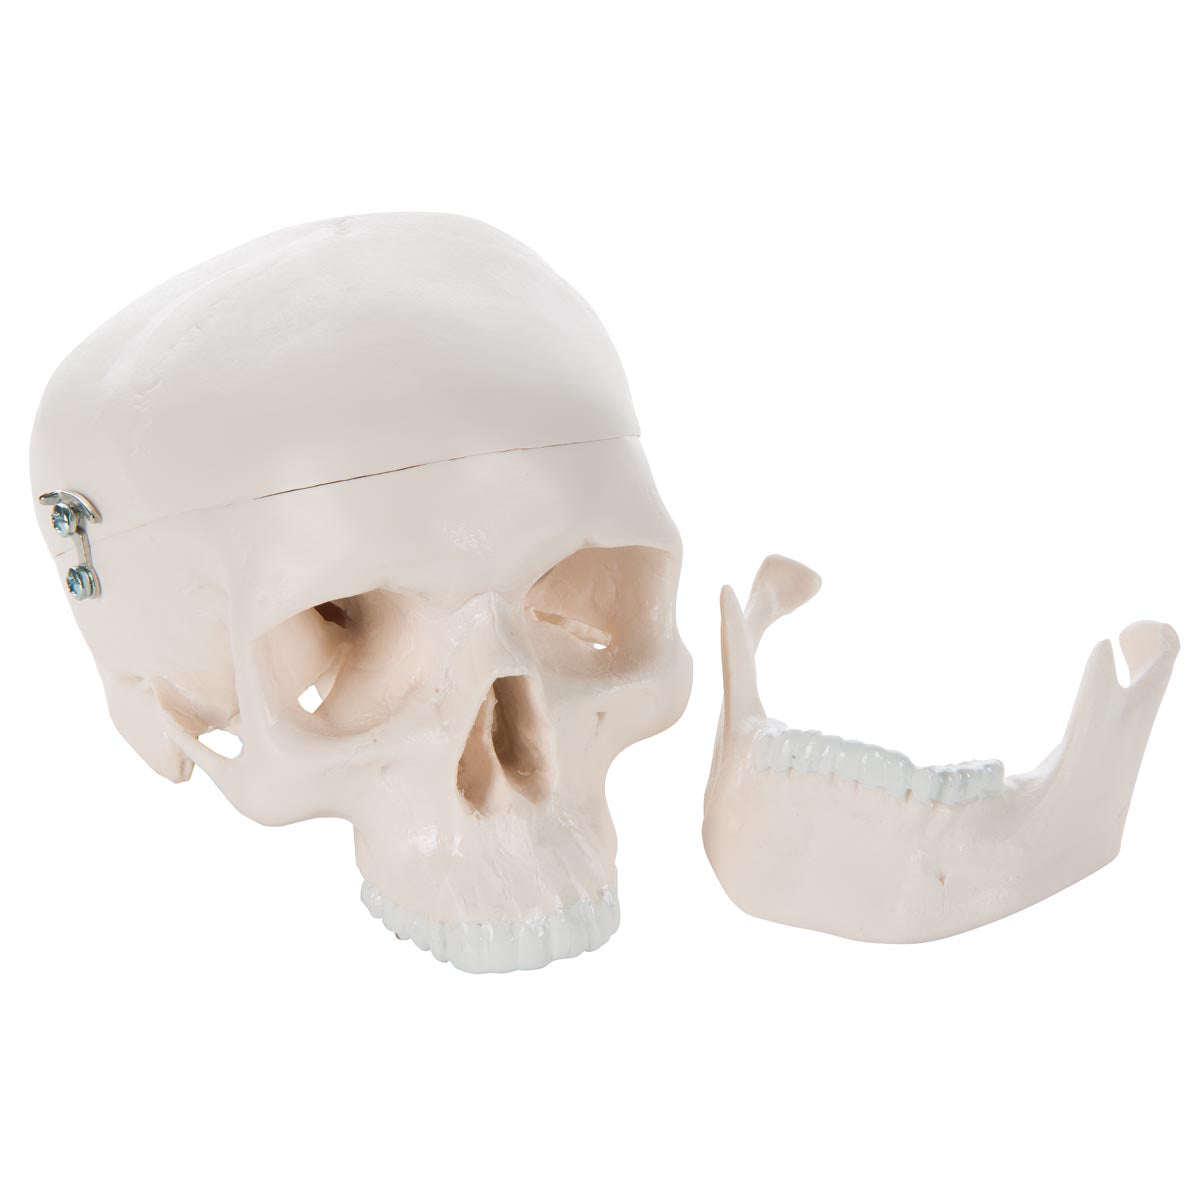 A18/15 Mini Human Skull Model, 3-part (Skullcap, Base of Skull, Mandible) - 3B Smart Anatomy